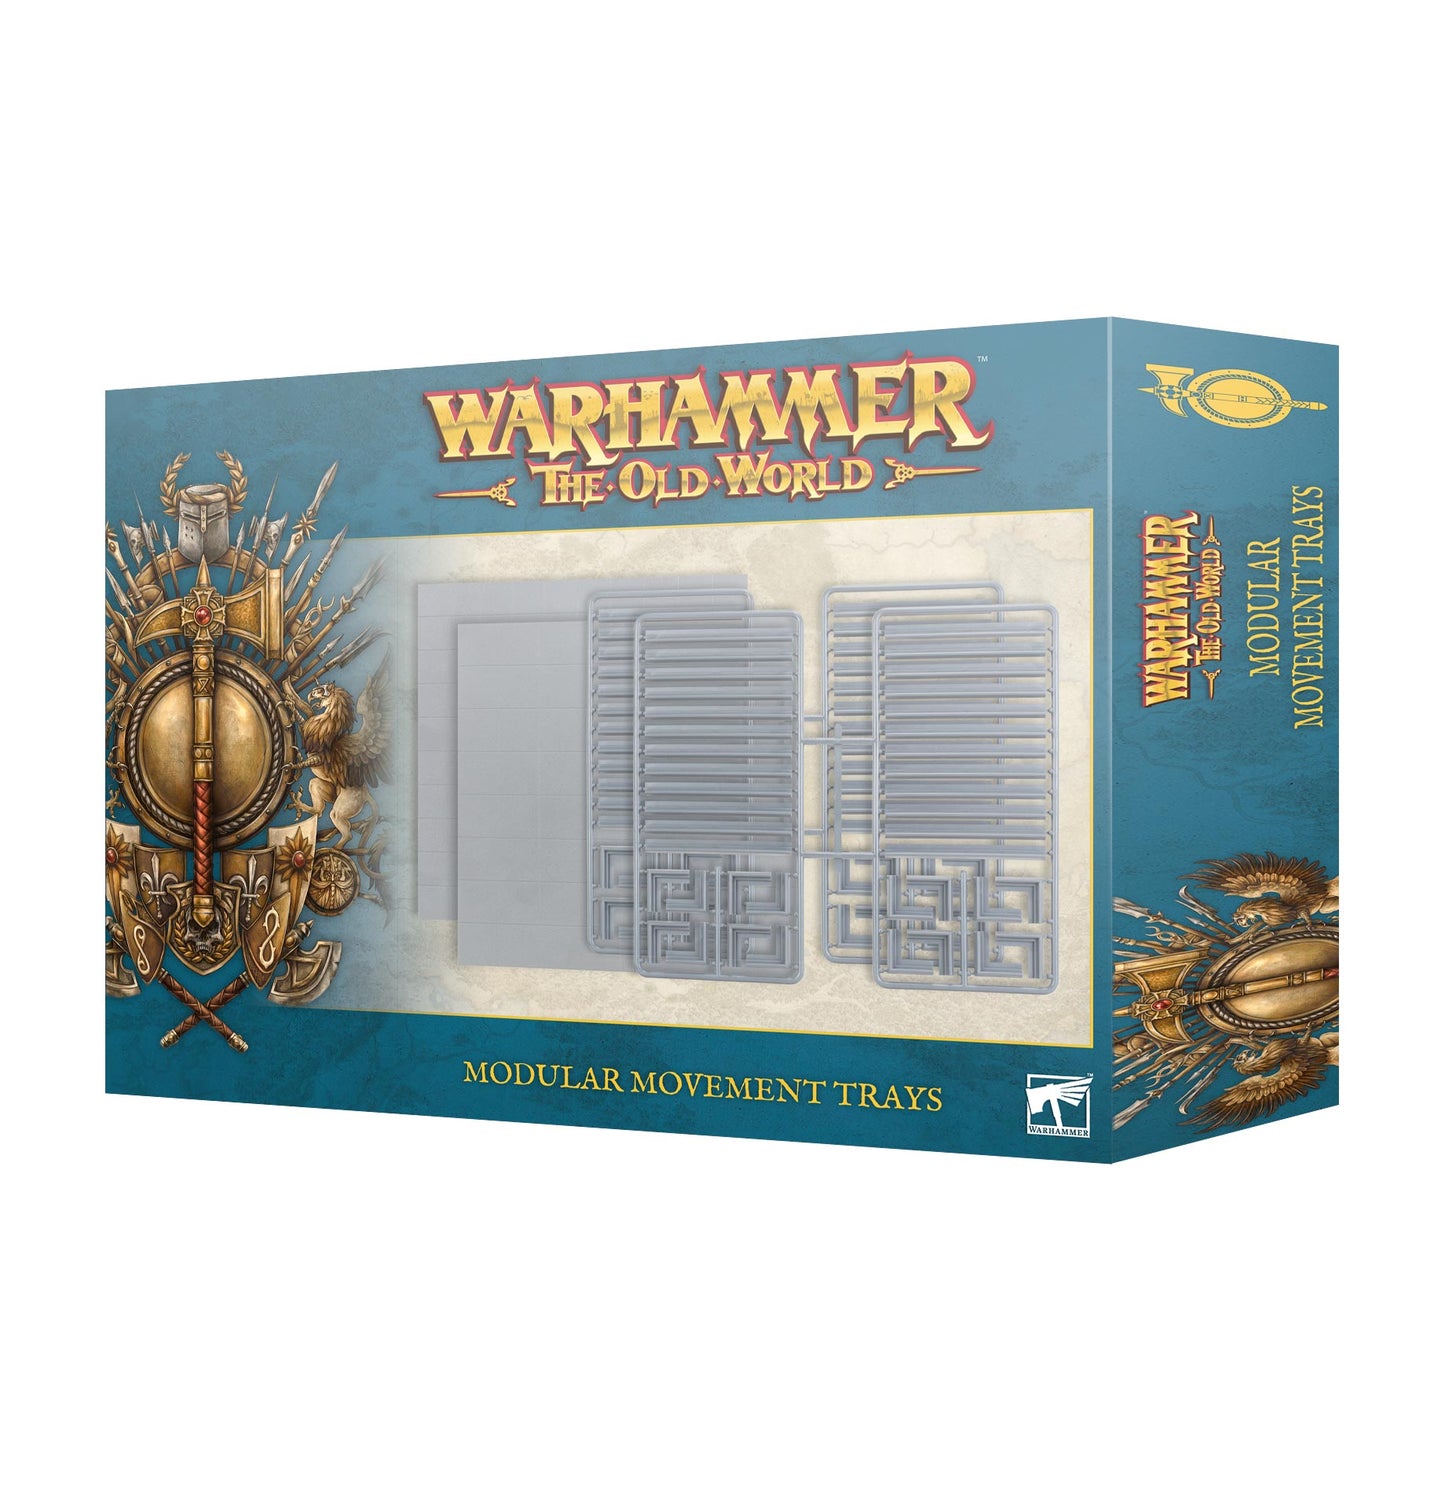 Warhammer: The Old World - Modular Movement Trays